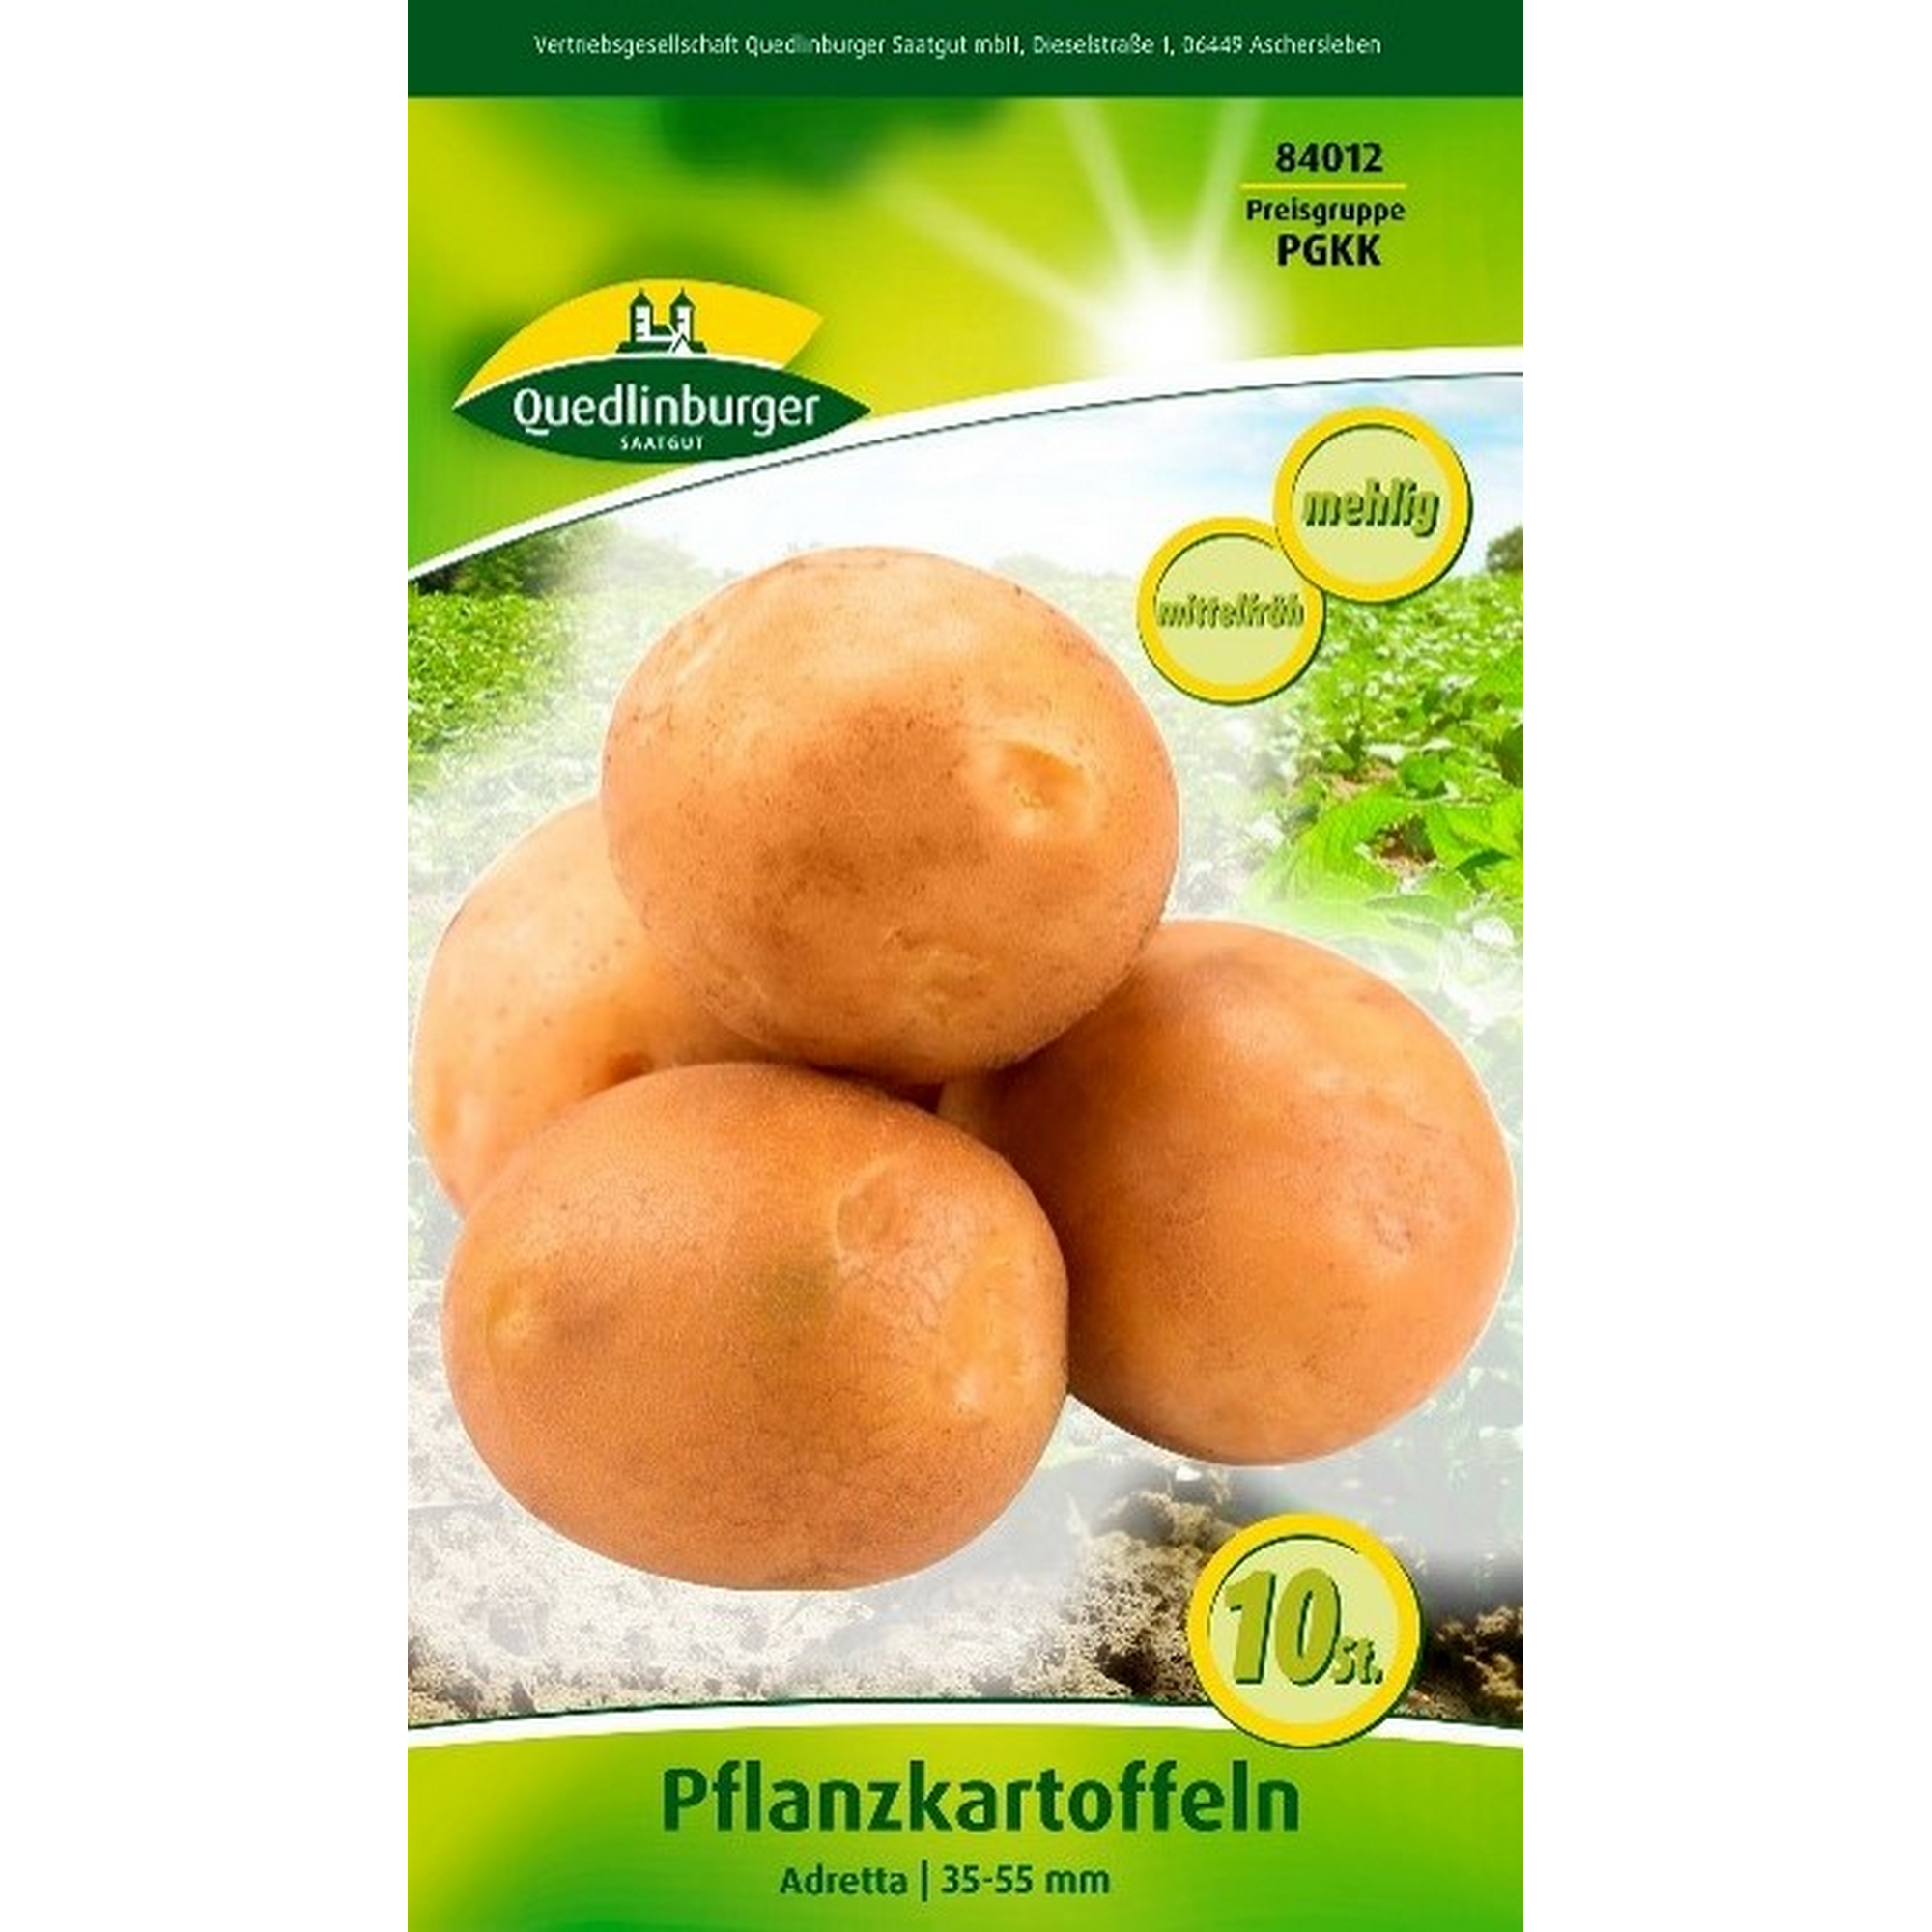 Pflanzkartoffel 'Adretta' gelb 10 Stück + product picture